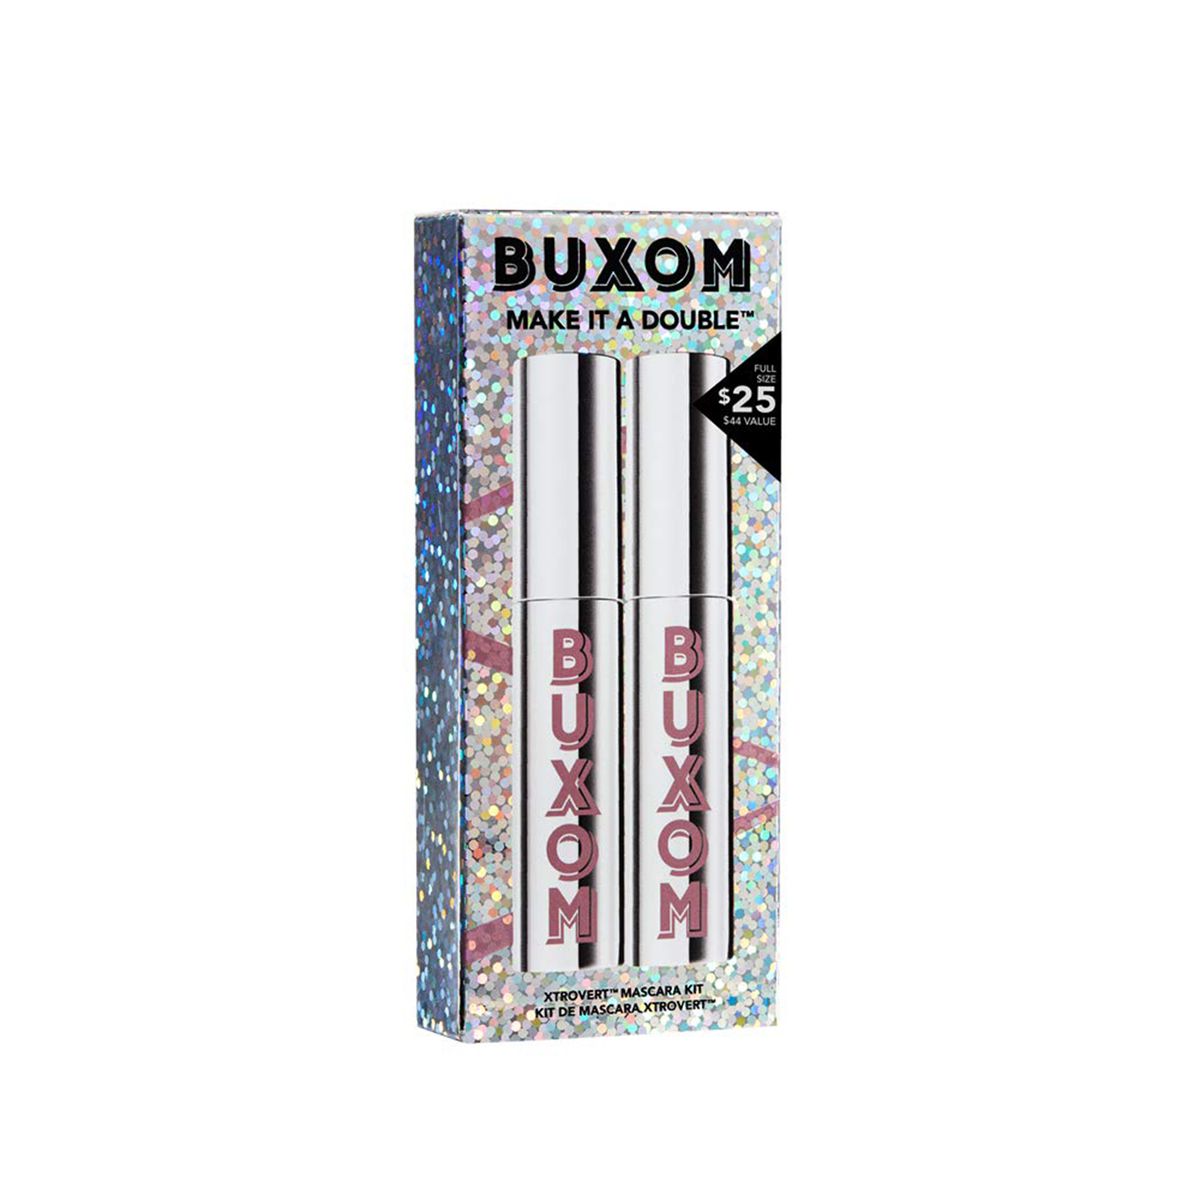 buxom make it double xtrovert mascara kit